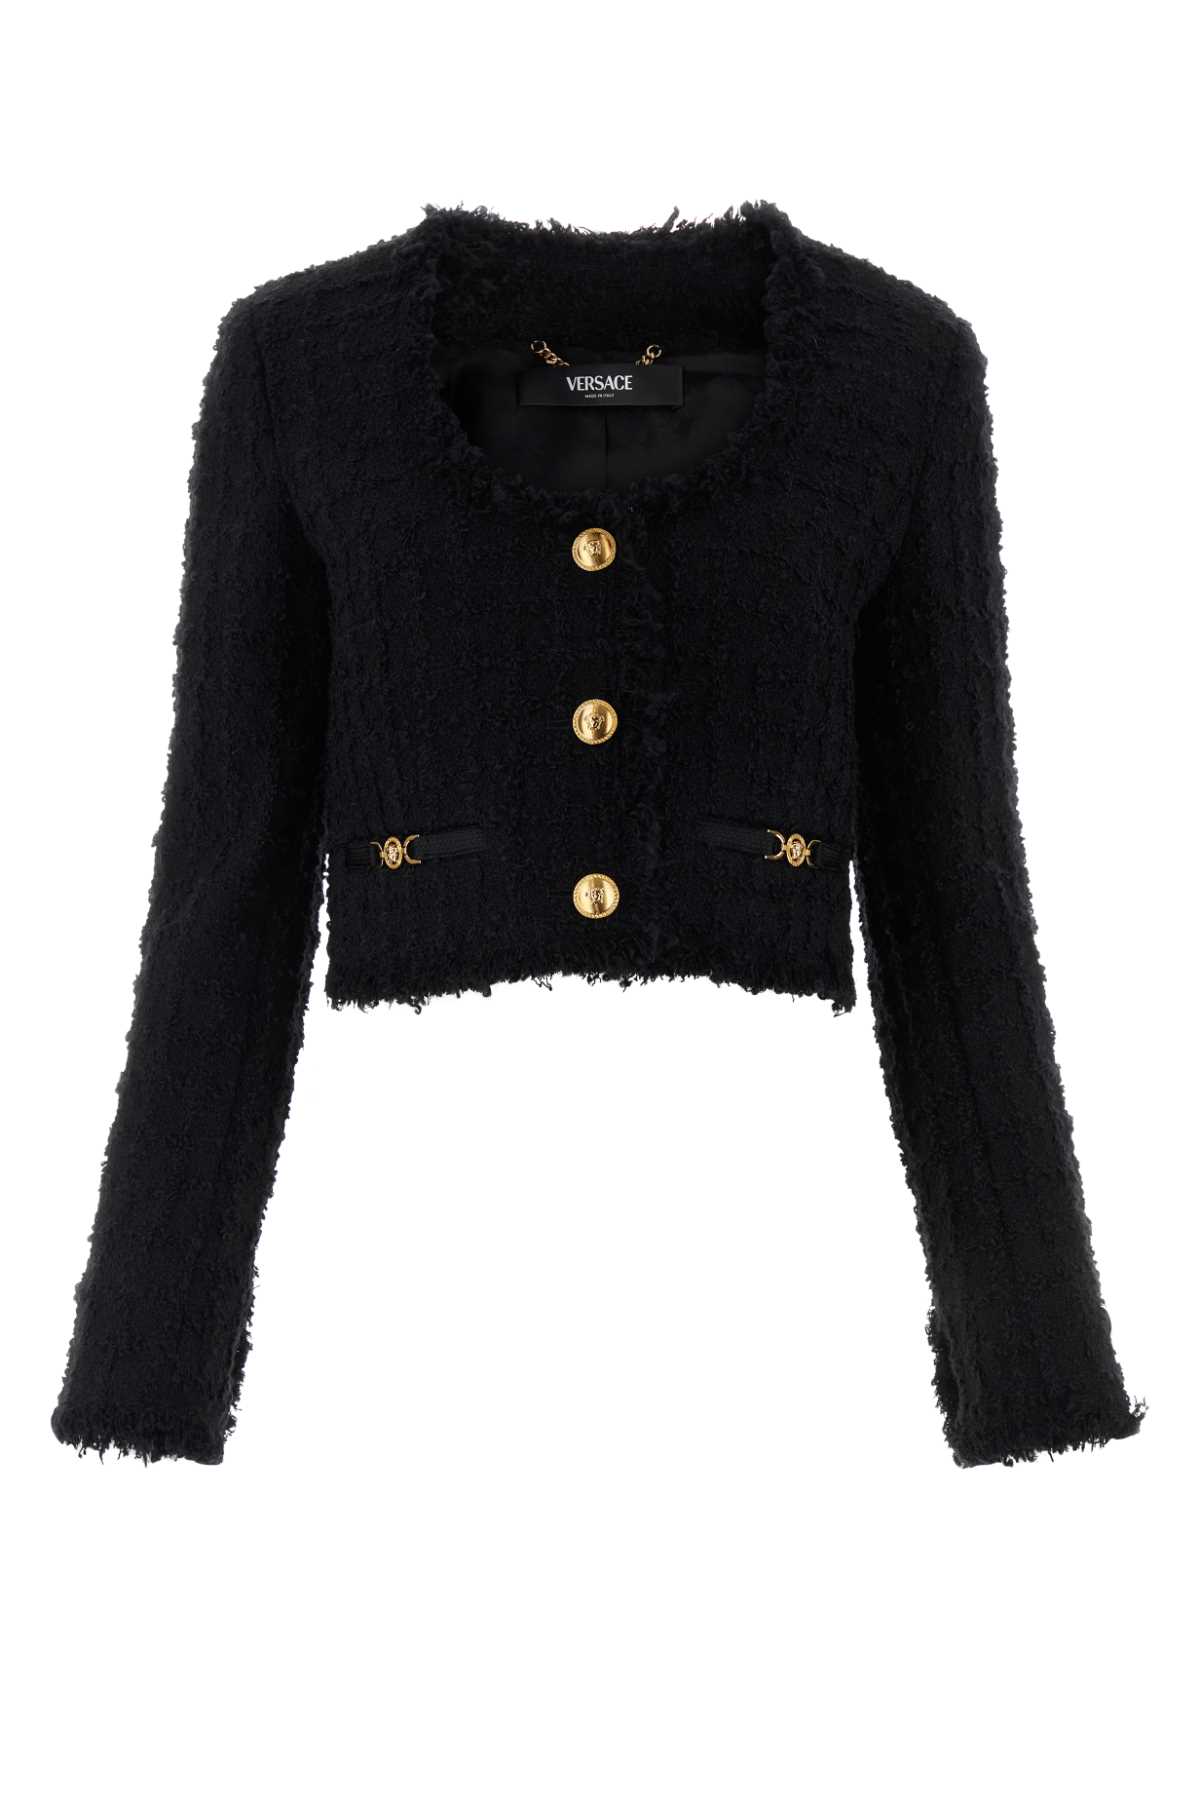 Versace Black Tweed Blazer